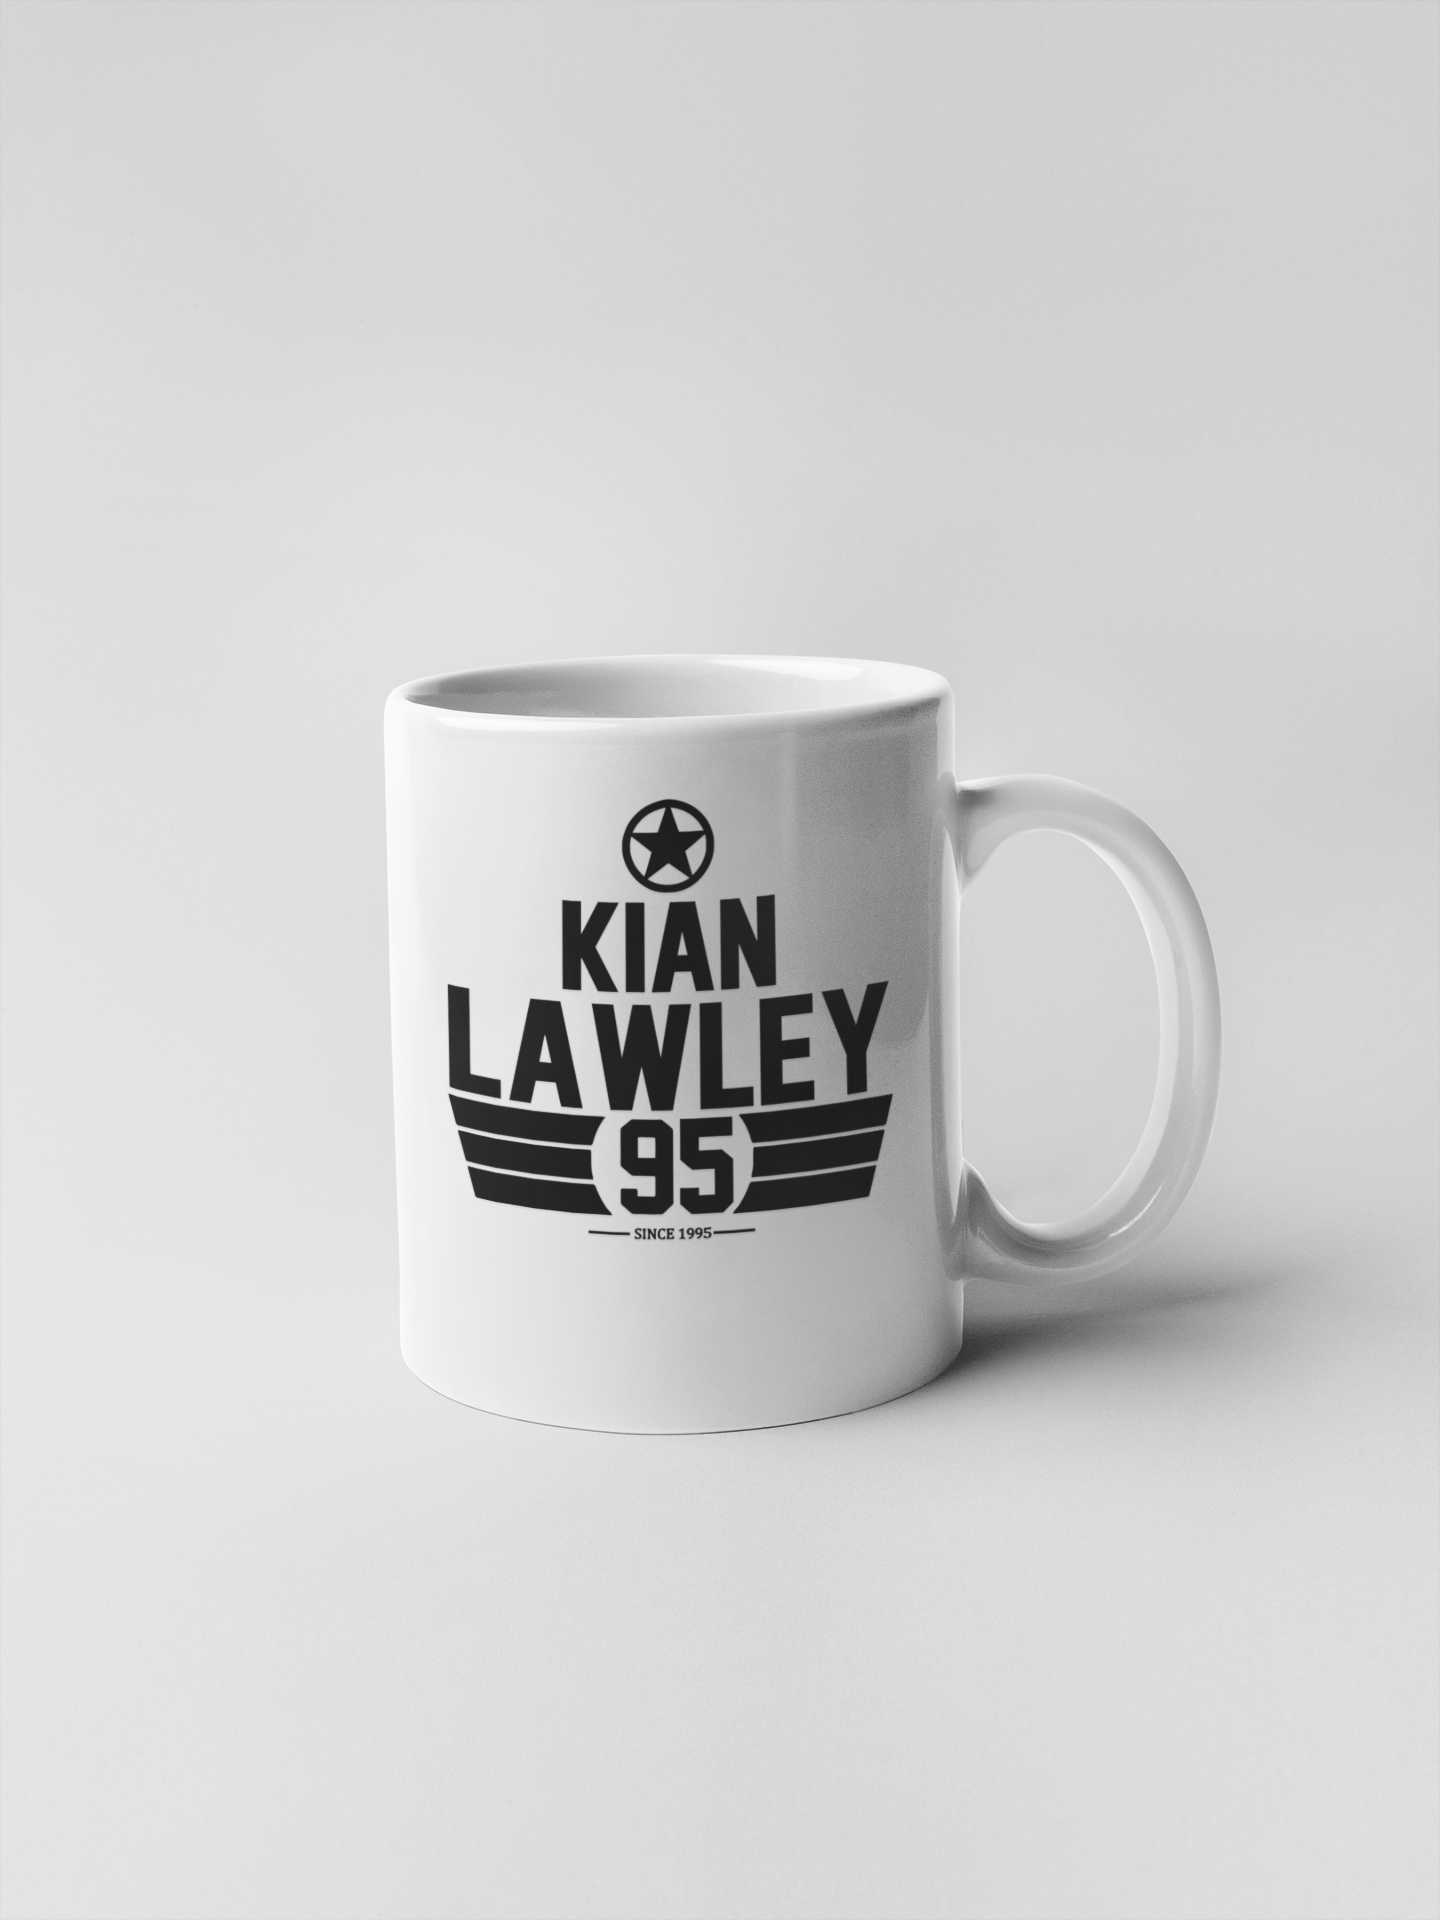 Our 2nd Life Kian Lawley Ceramic Coffee Mugs